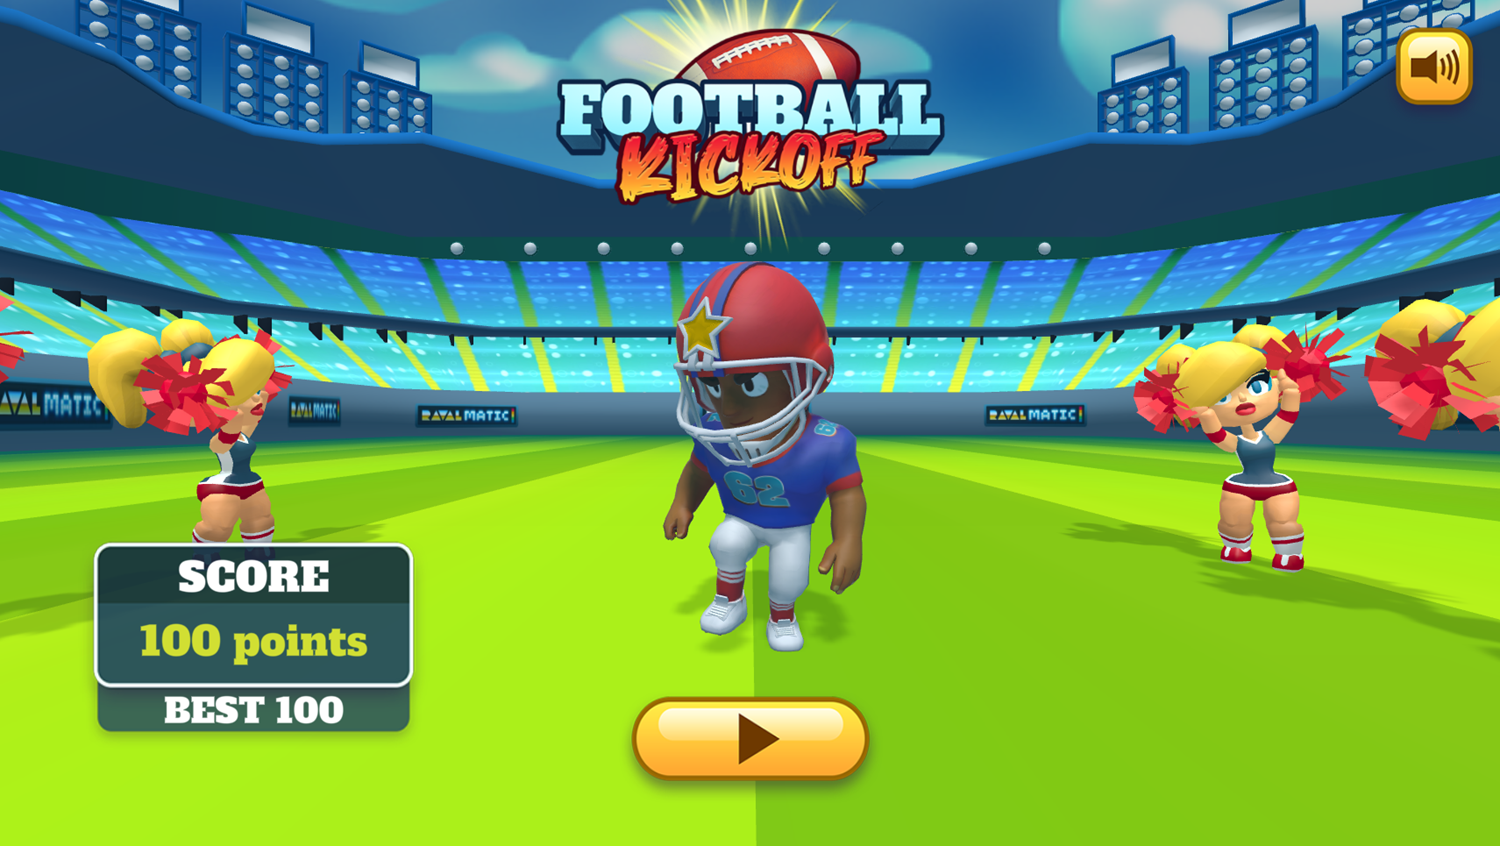 Football Kickoff Game Score Screenshot.